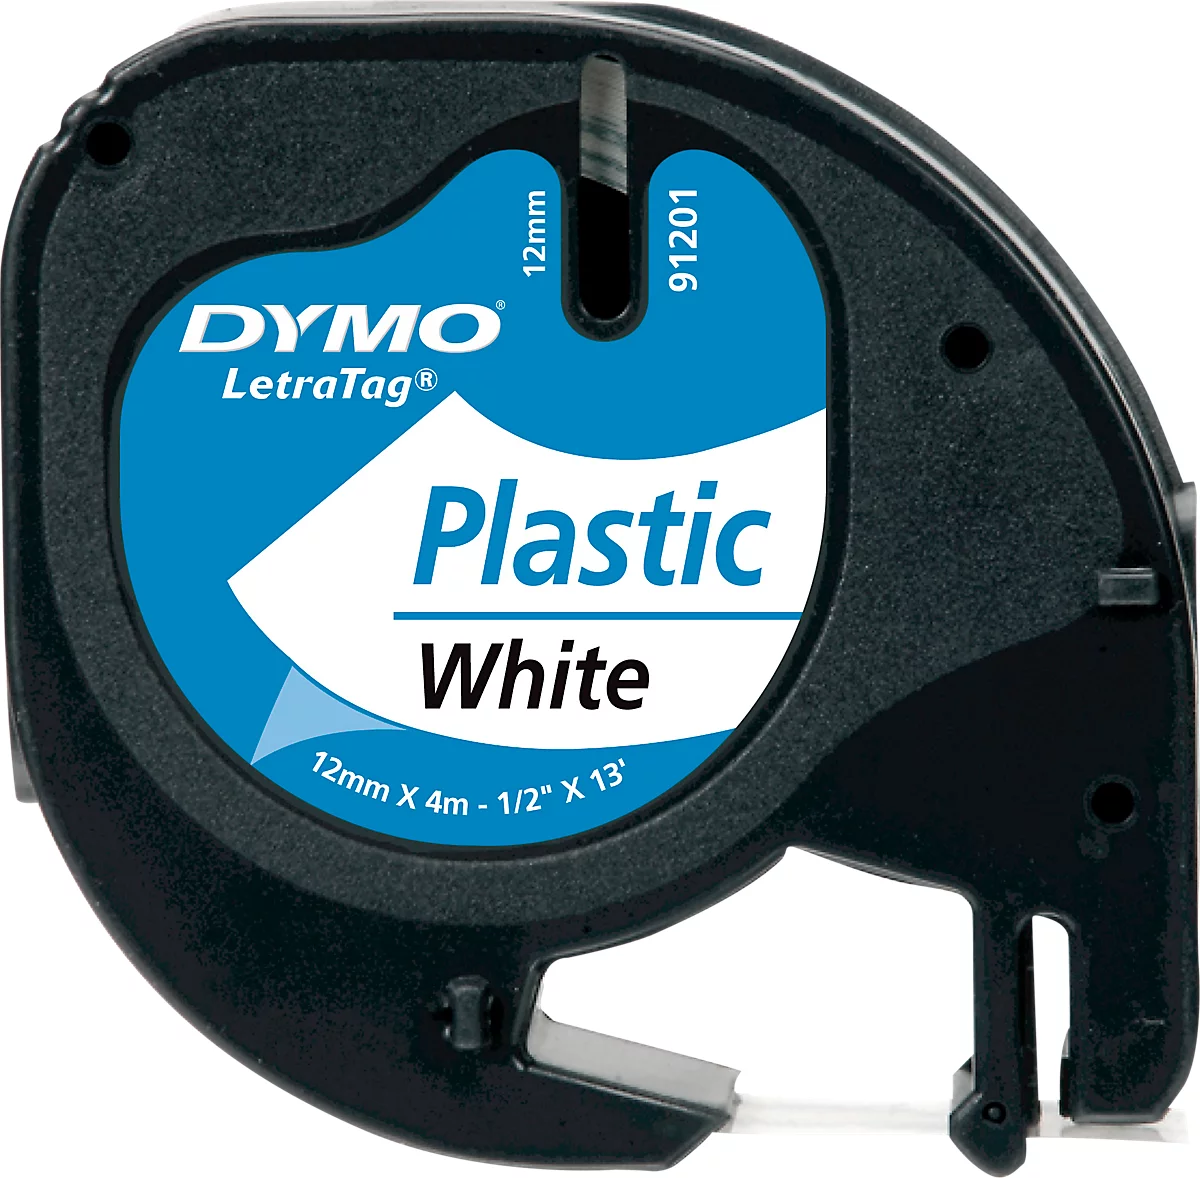 Casete de cinta para DYMO® Letra Tag, plástico, 12 mm, blanco